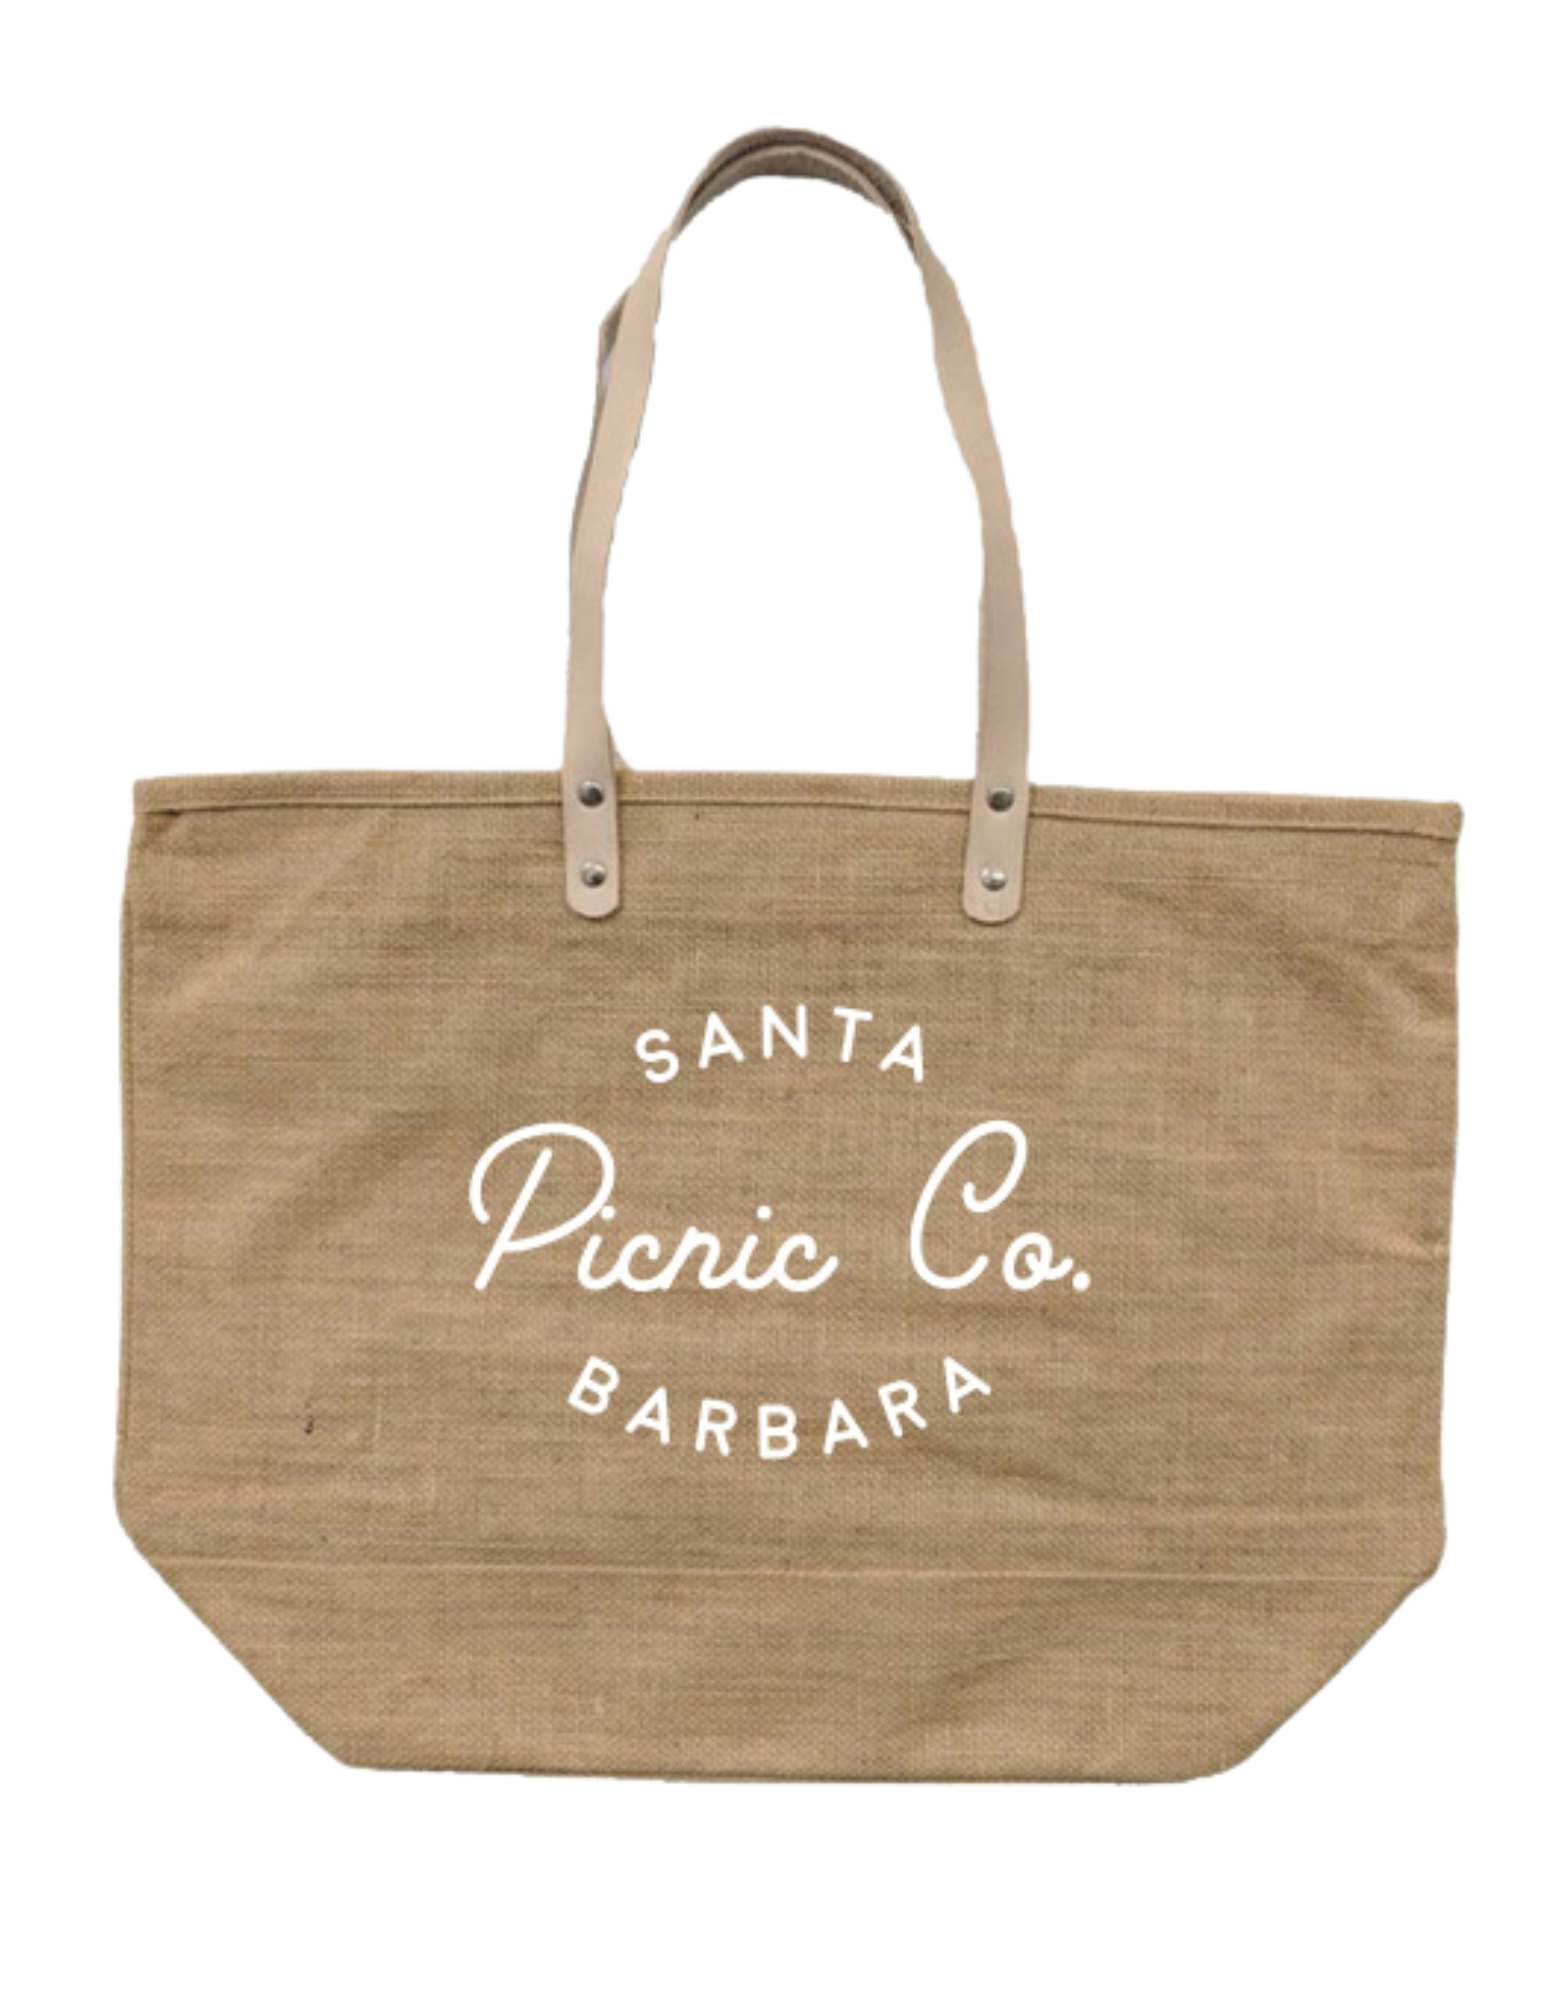 Santa Barbara Picnic Company